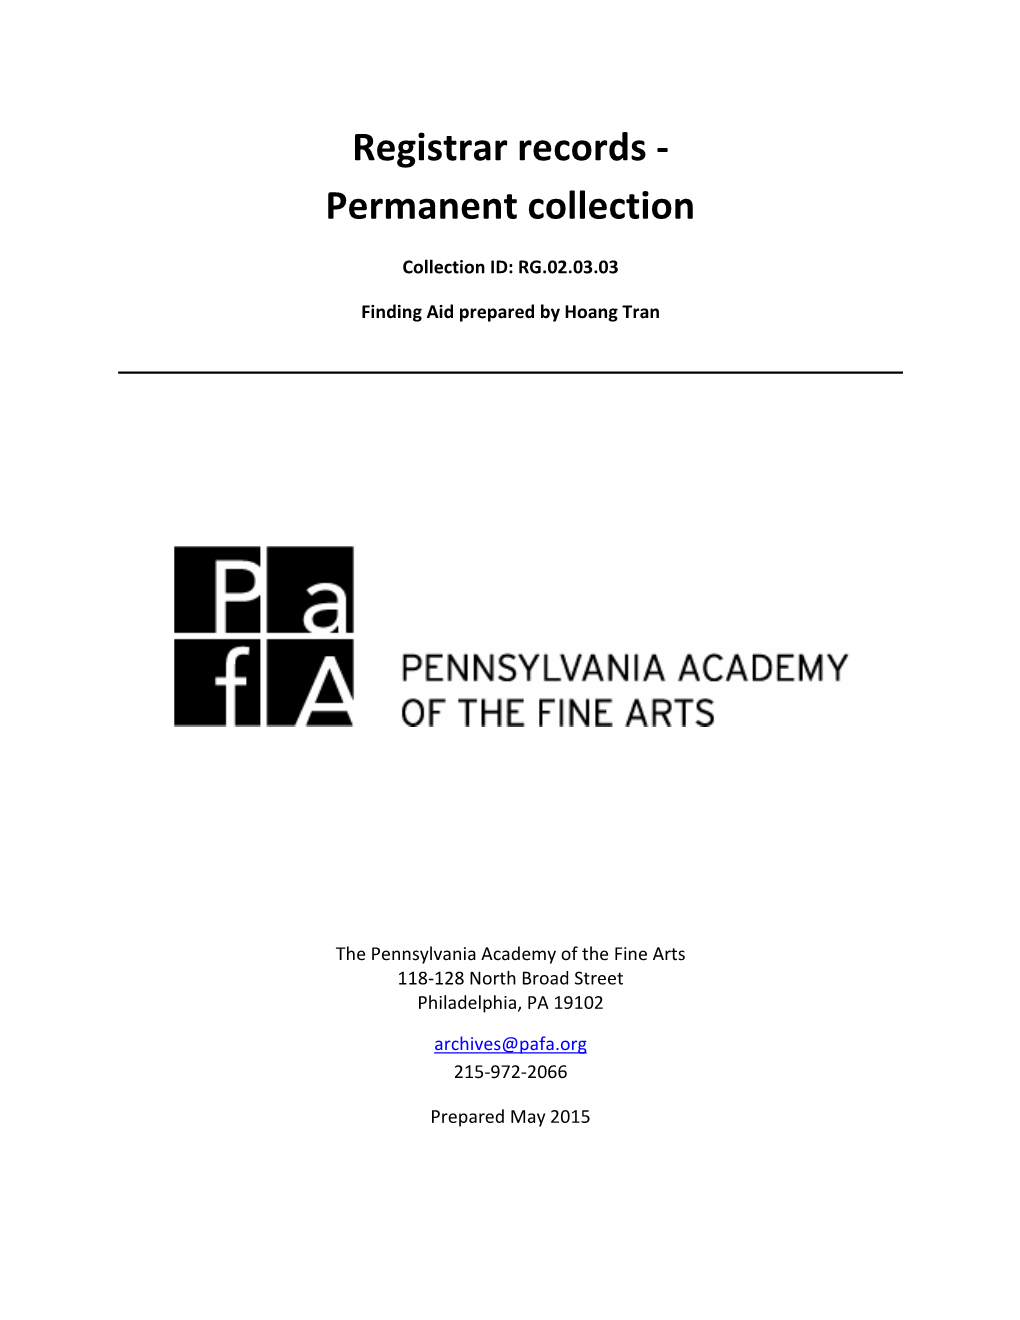 Registrar Records - Permanent Collection